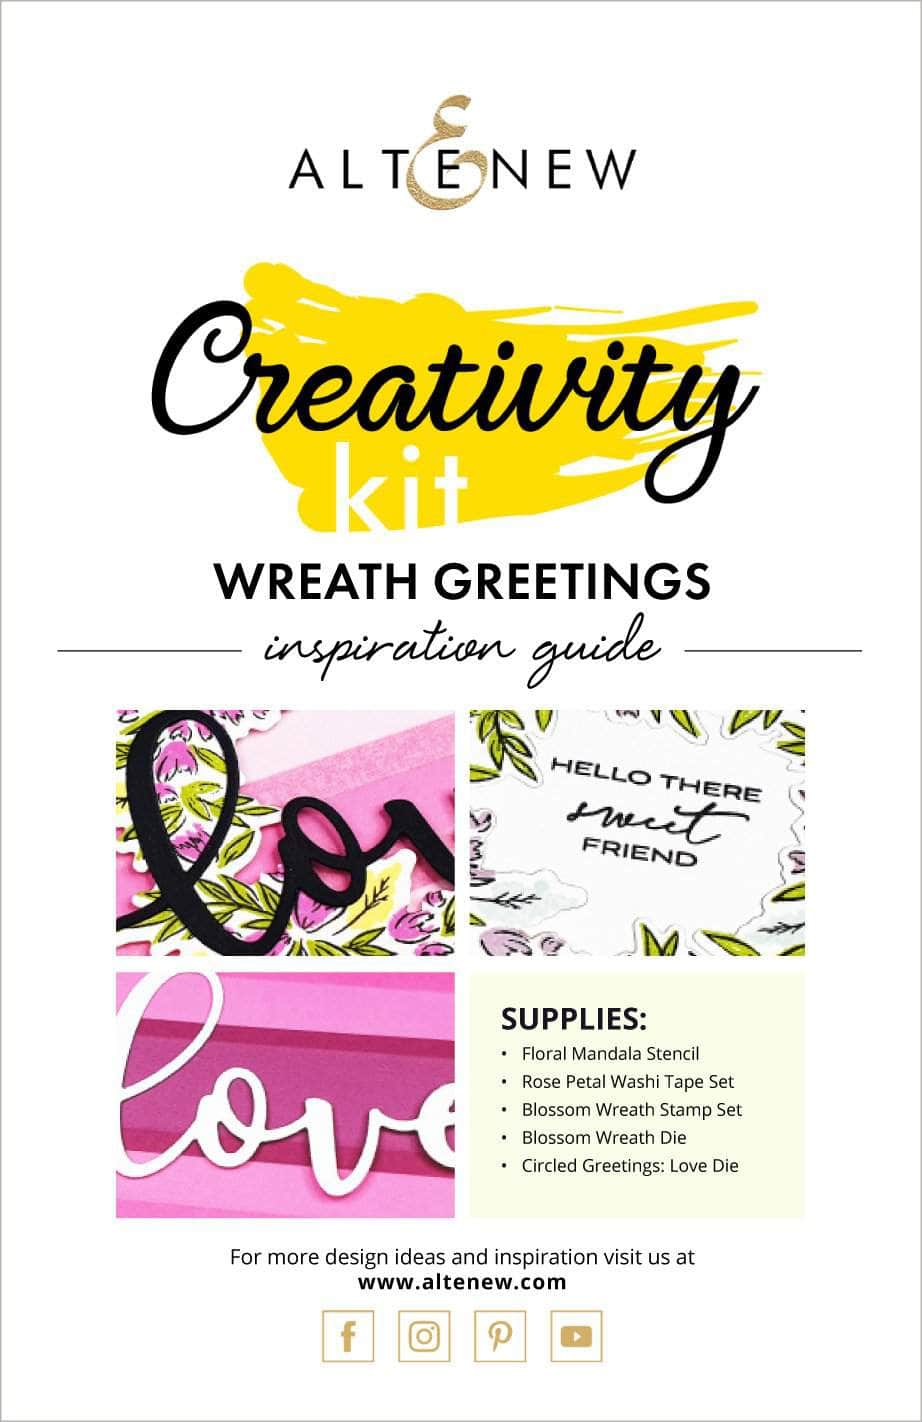 Printed Media Wreath Greetings Creativity Kit Inspiration Guide